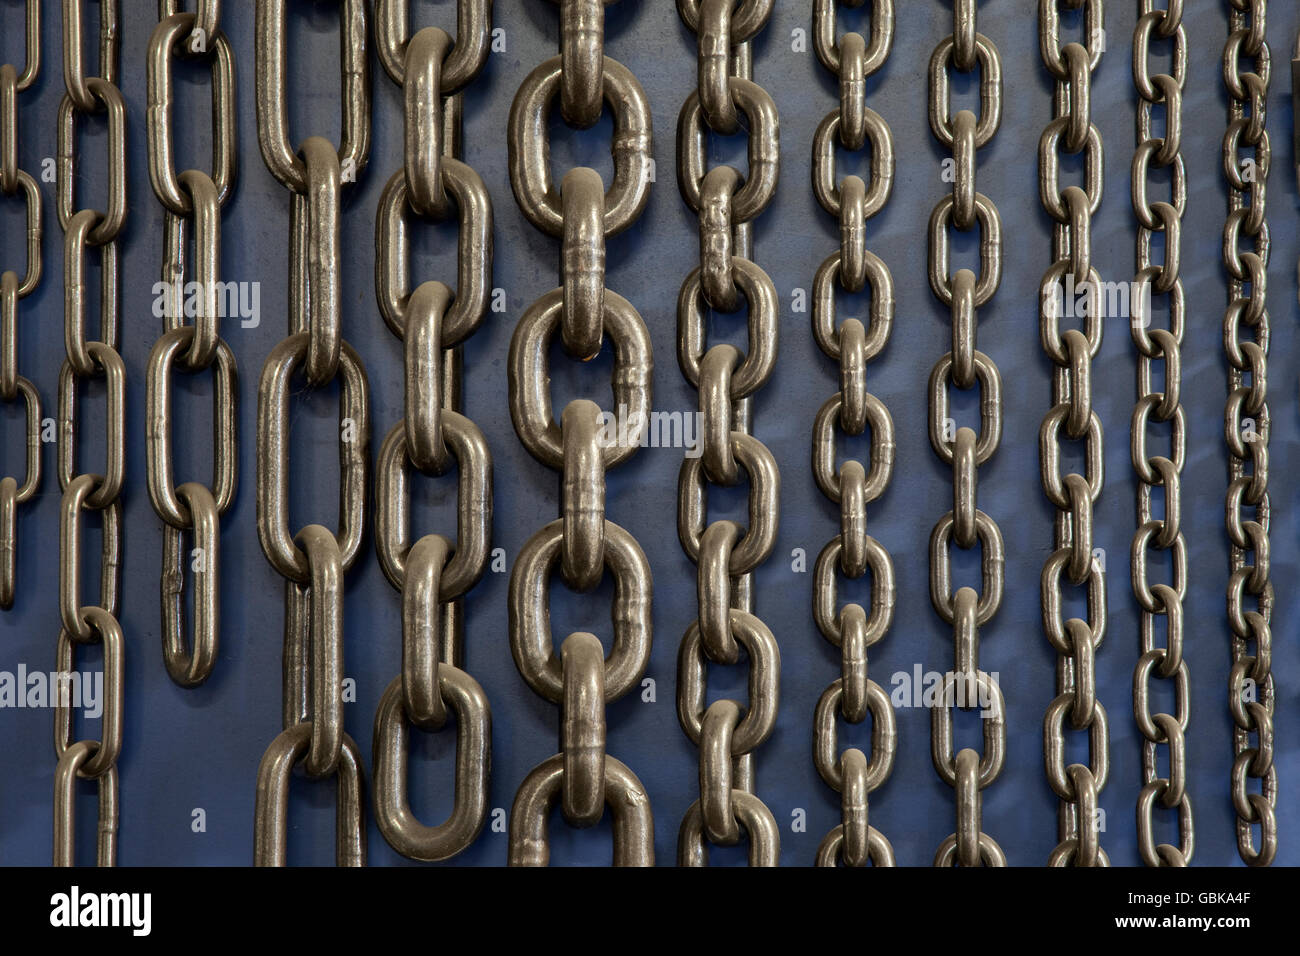 Chains, chain links Stock Photo